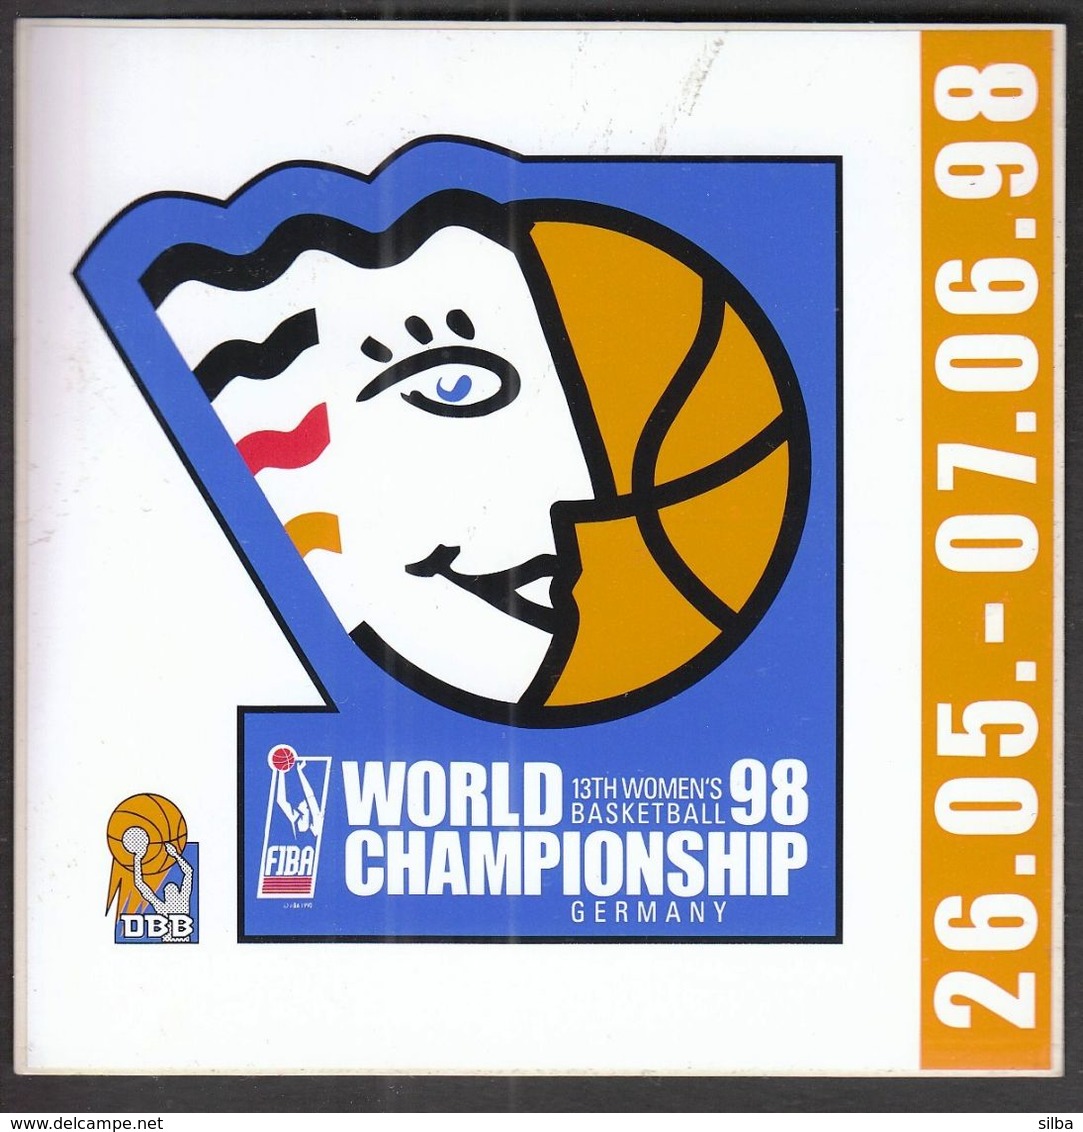 Germany 1998 / FIBA 13th Women's World Basketball Championship / Sticker - Apparel, Souvenirs & Other